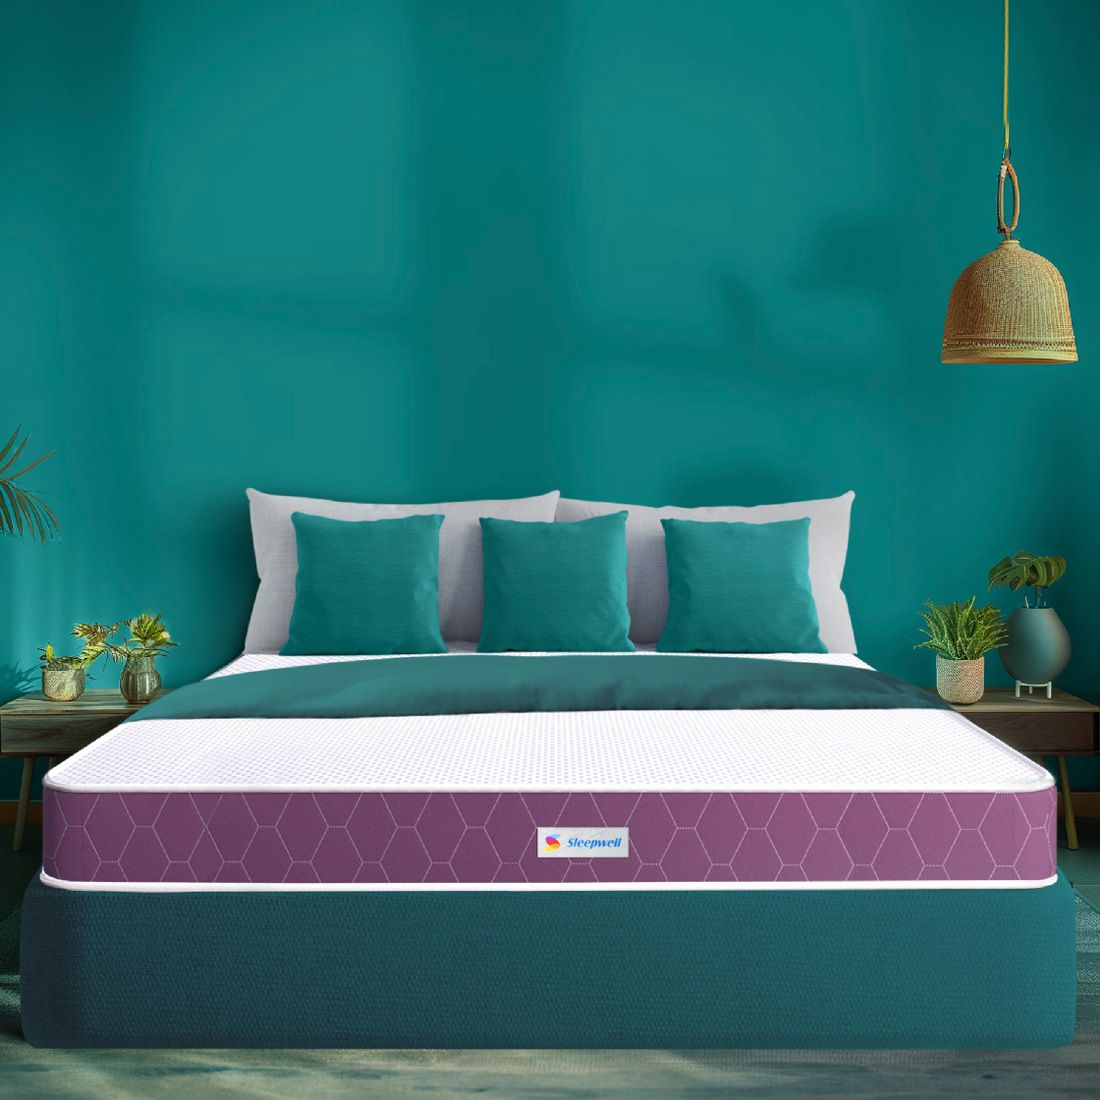 Sleepwell Ortho Mattress | Quilted | 5-inch King Bed Size, Impressions Memory Foam, Medium Firm Mattress(Purple, 84x70x5 )